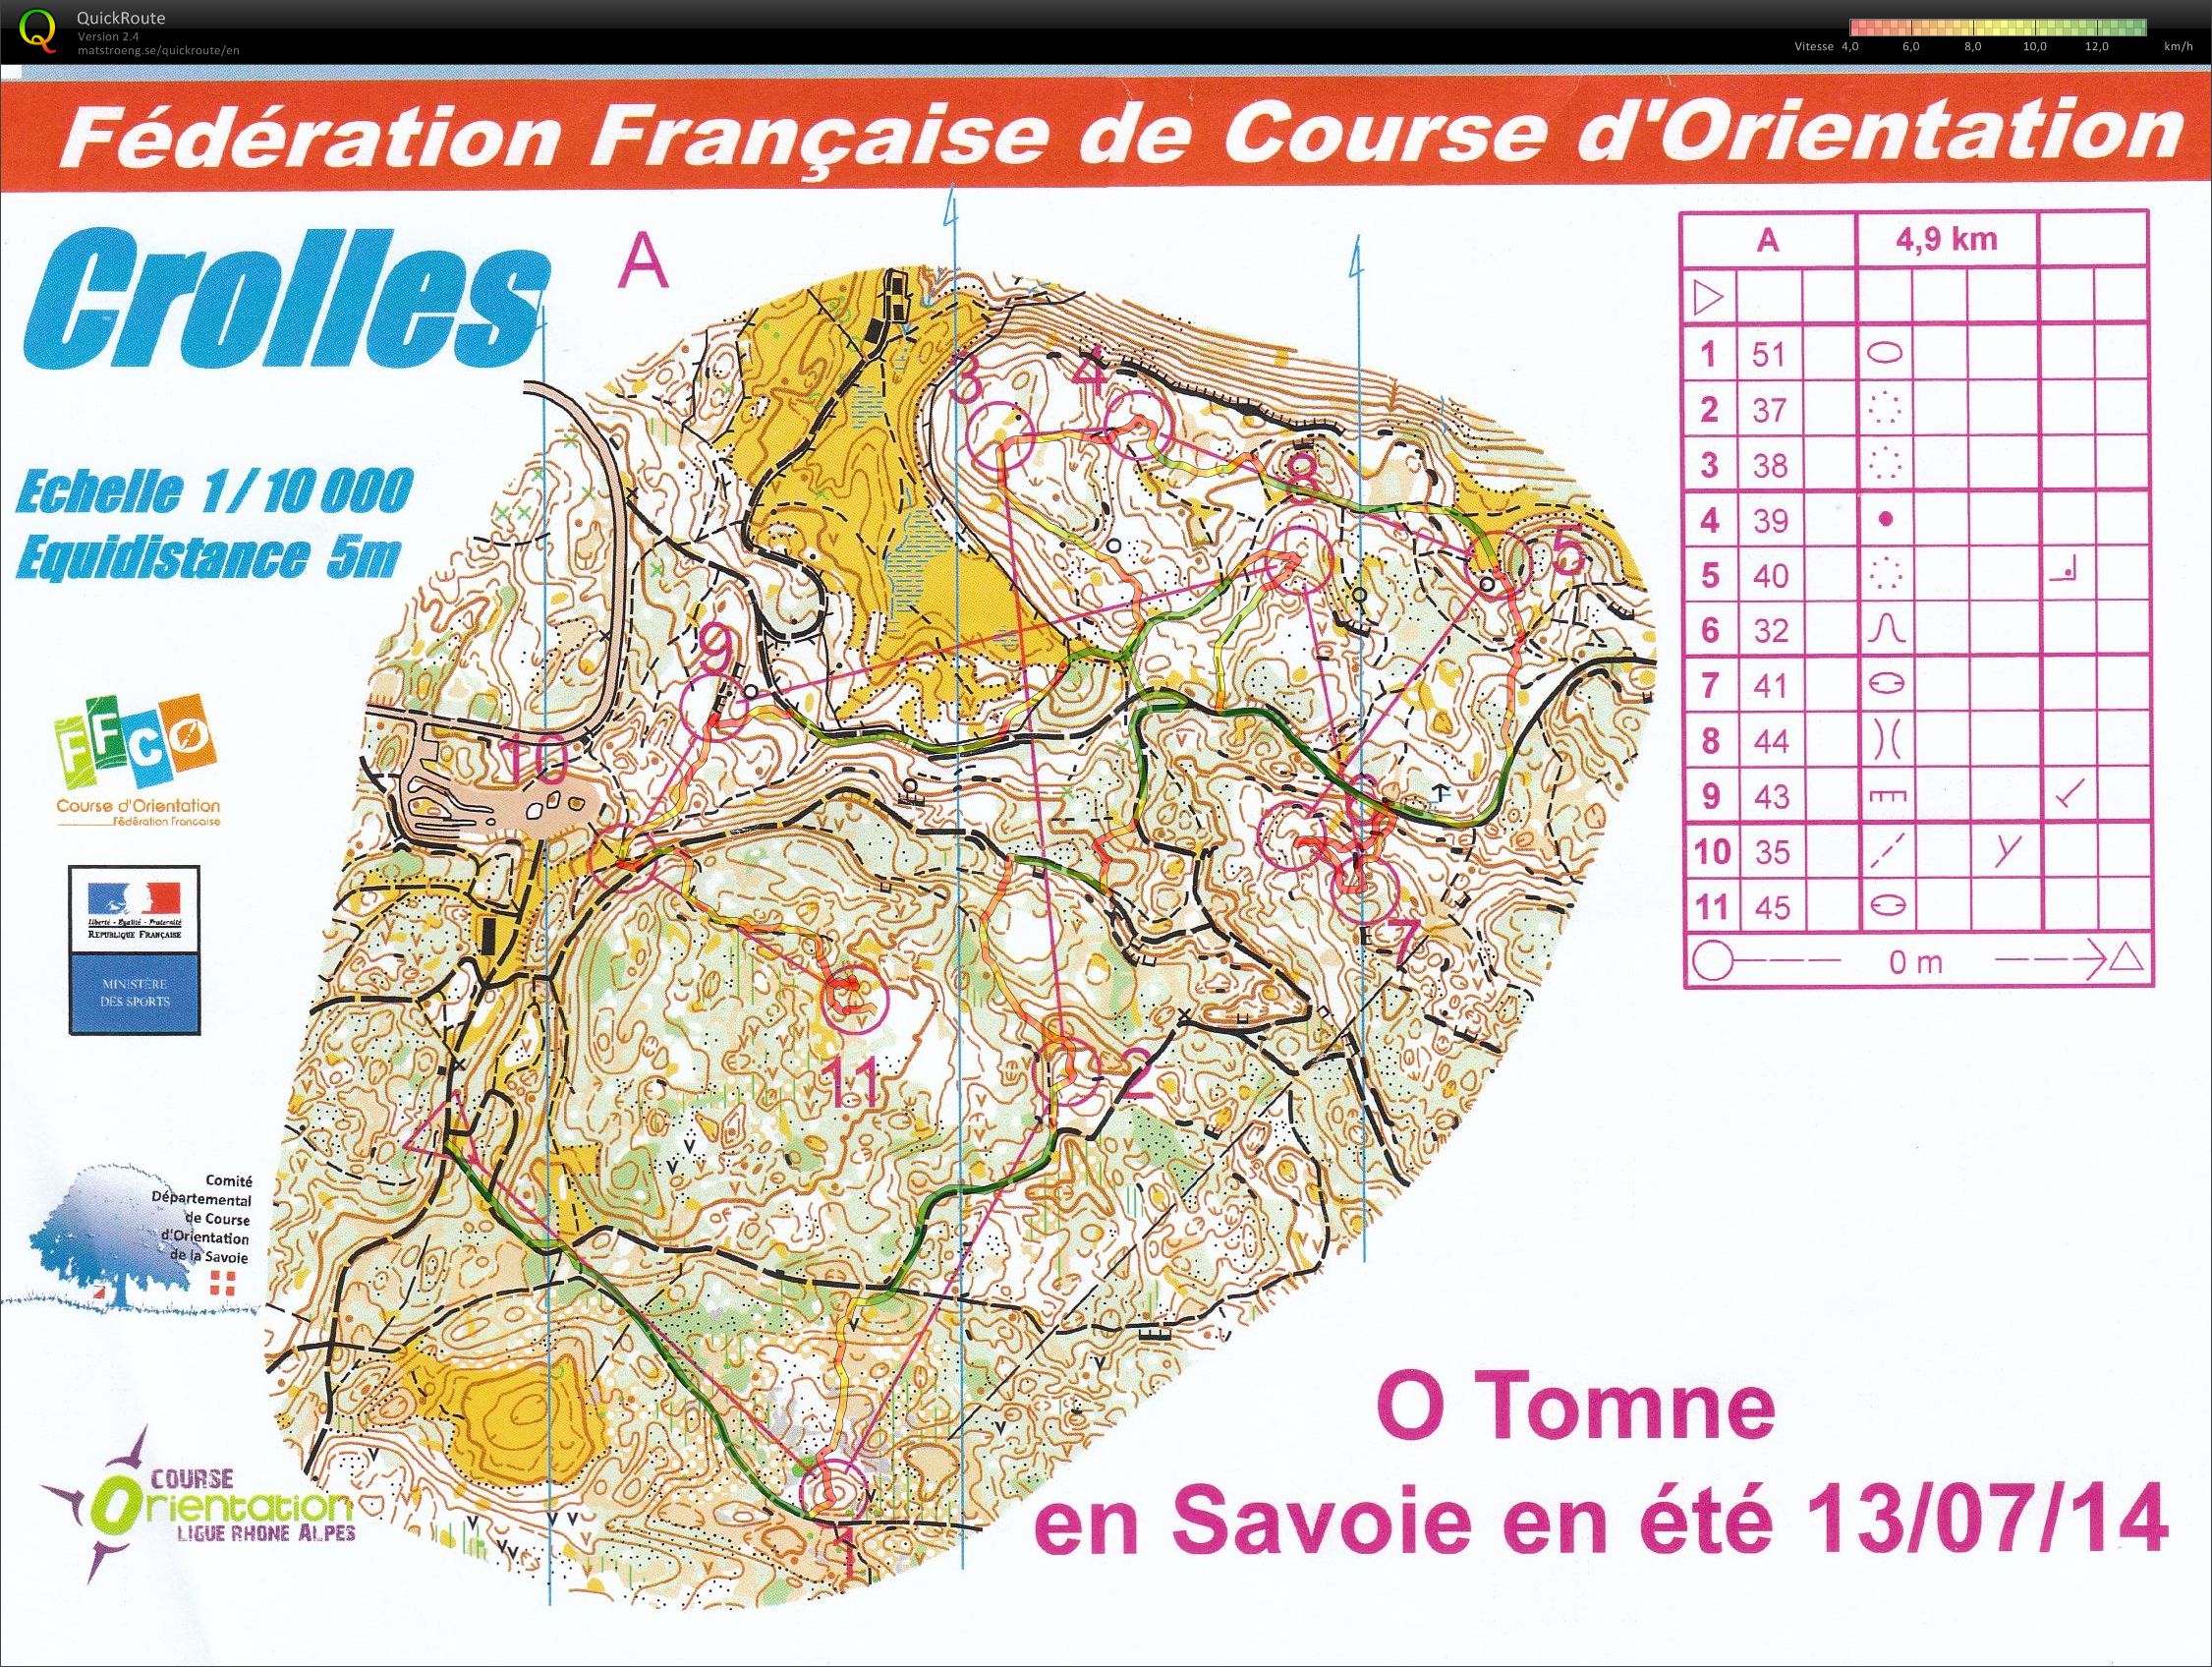 O'Tomne en Savoie Etape 4 (1/2) (2014-07-13)